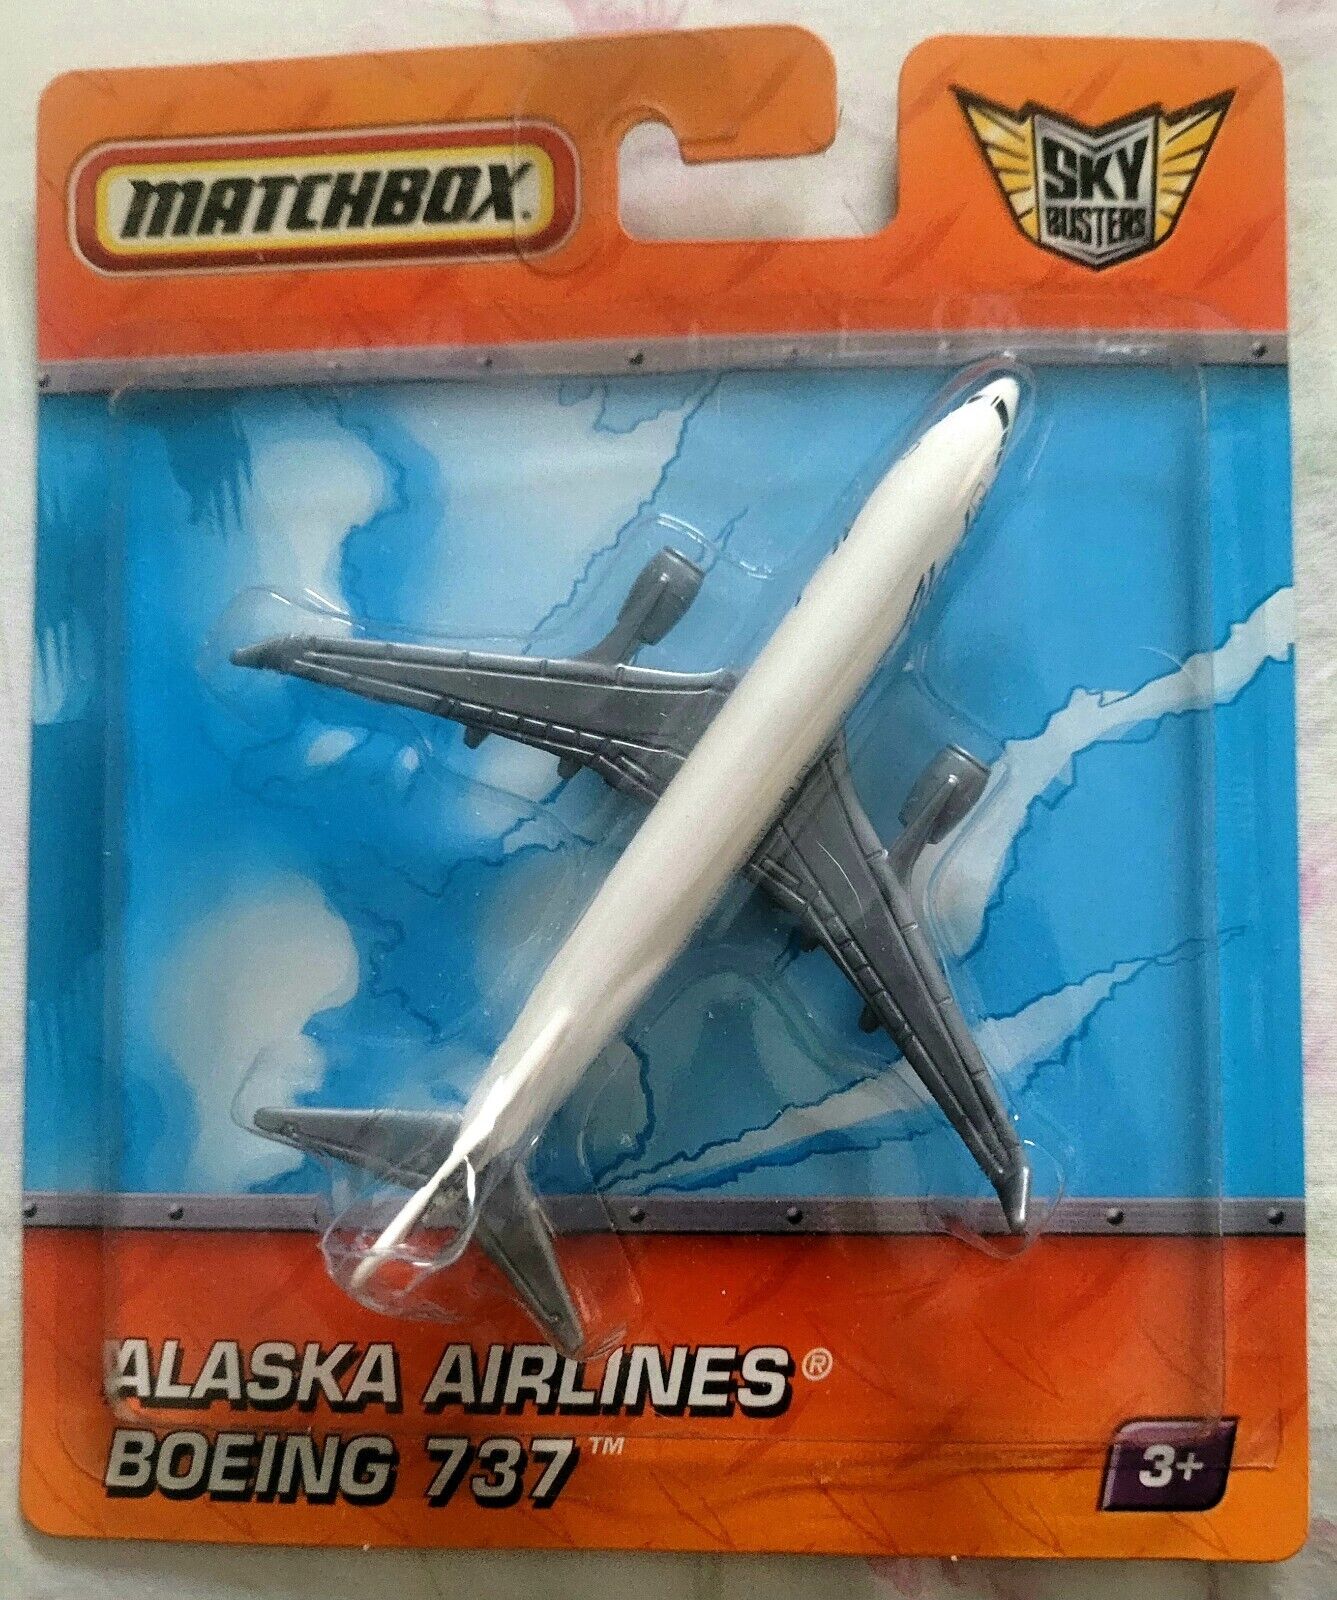 2009 Matchbox Sky Busters Alaska Airlines Boeing 737 - NOS - MOMC - VRHTF